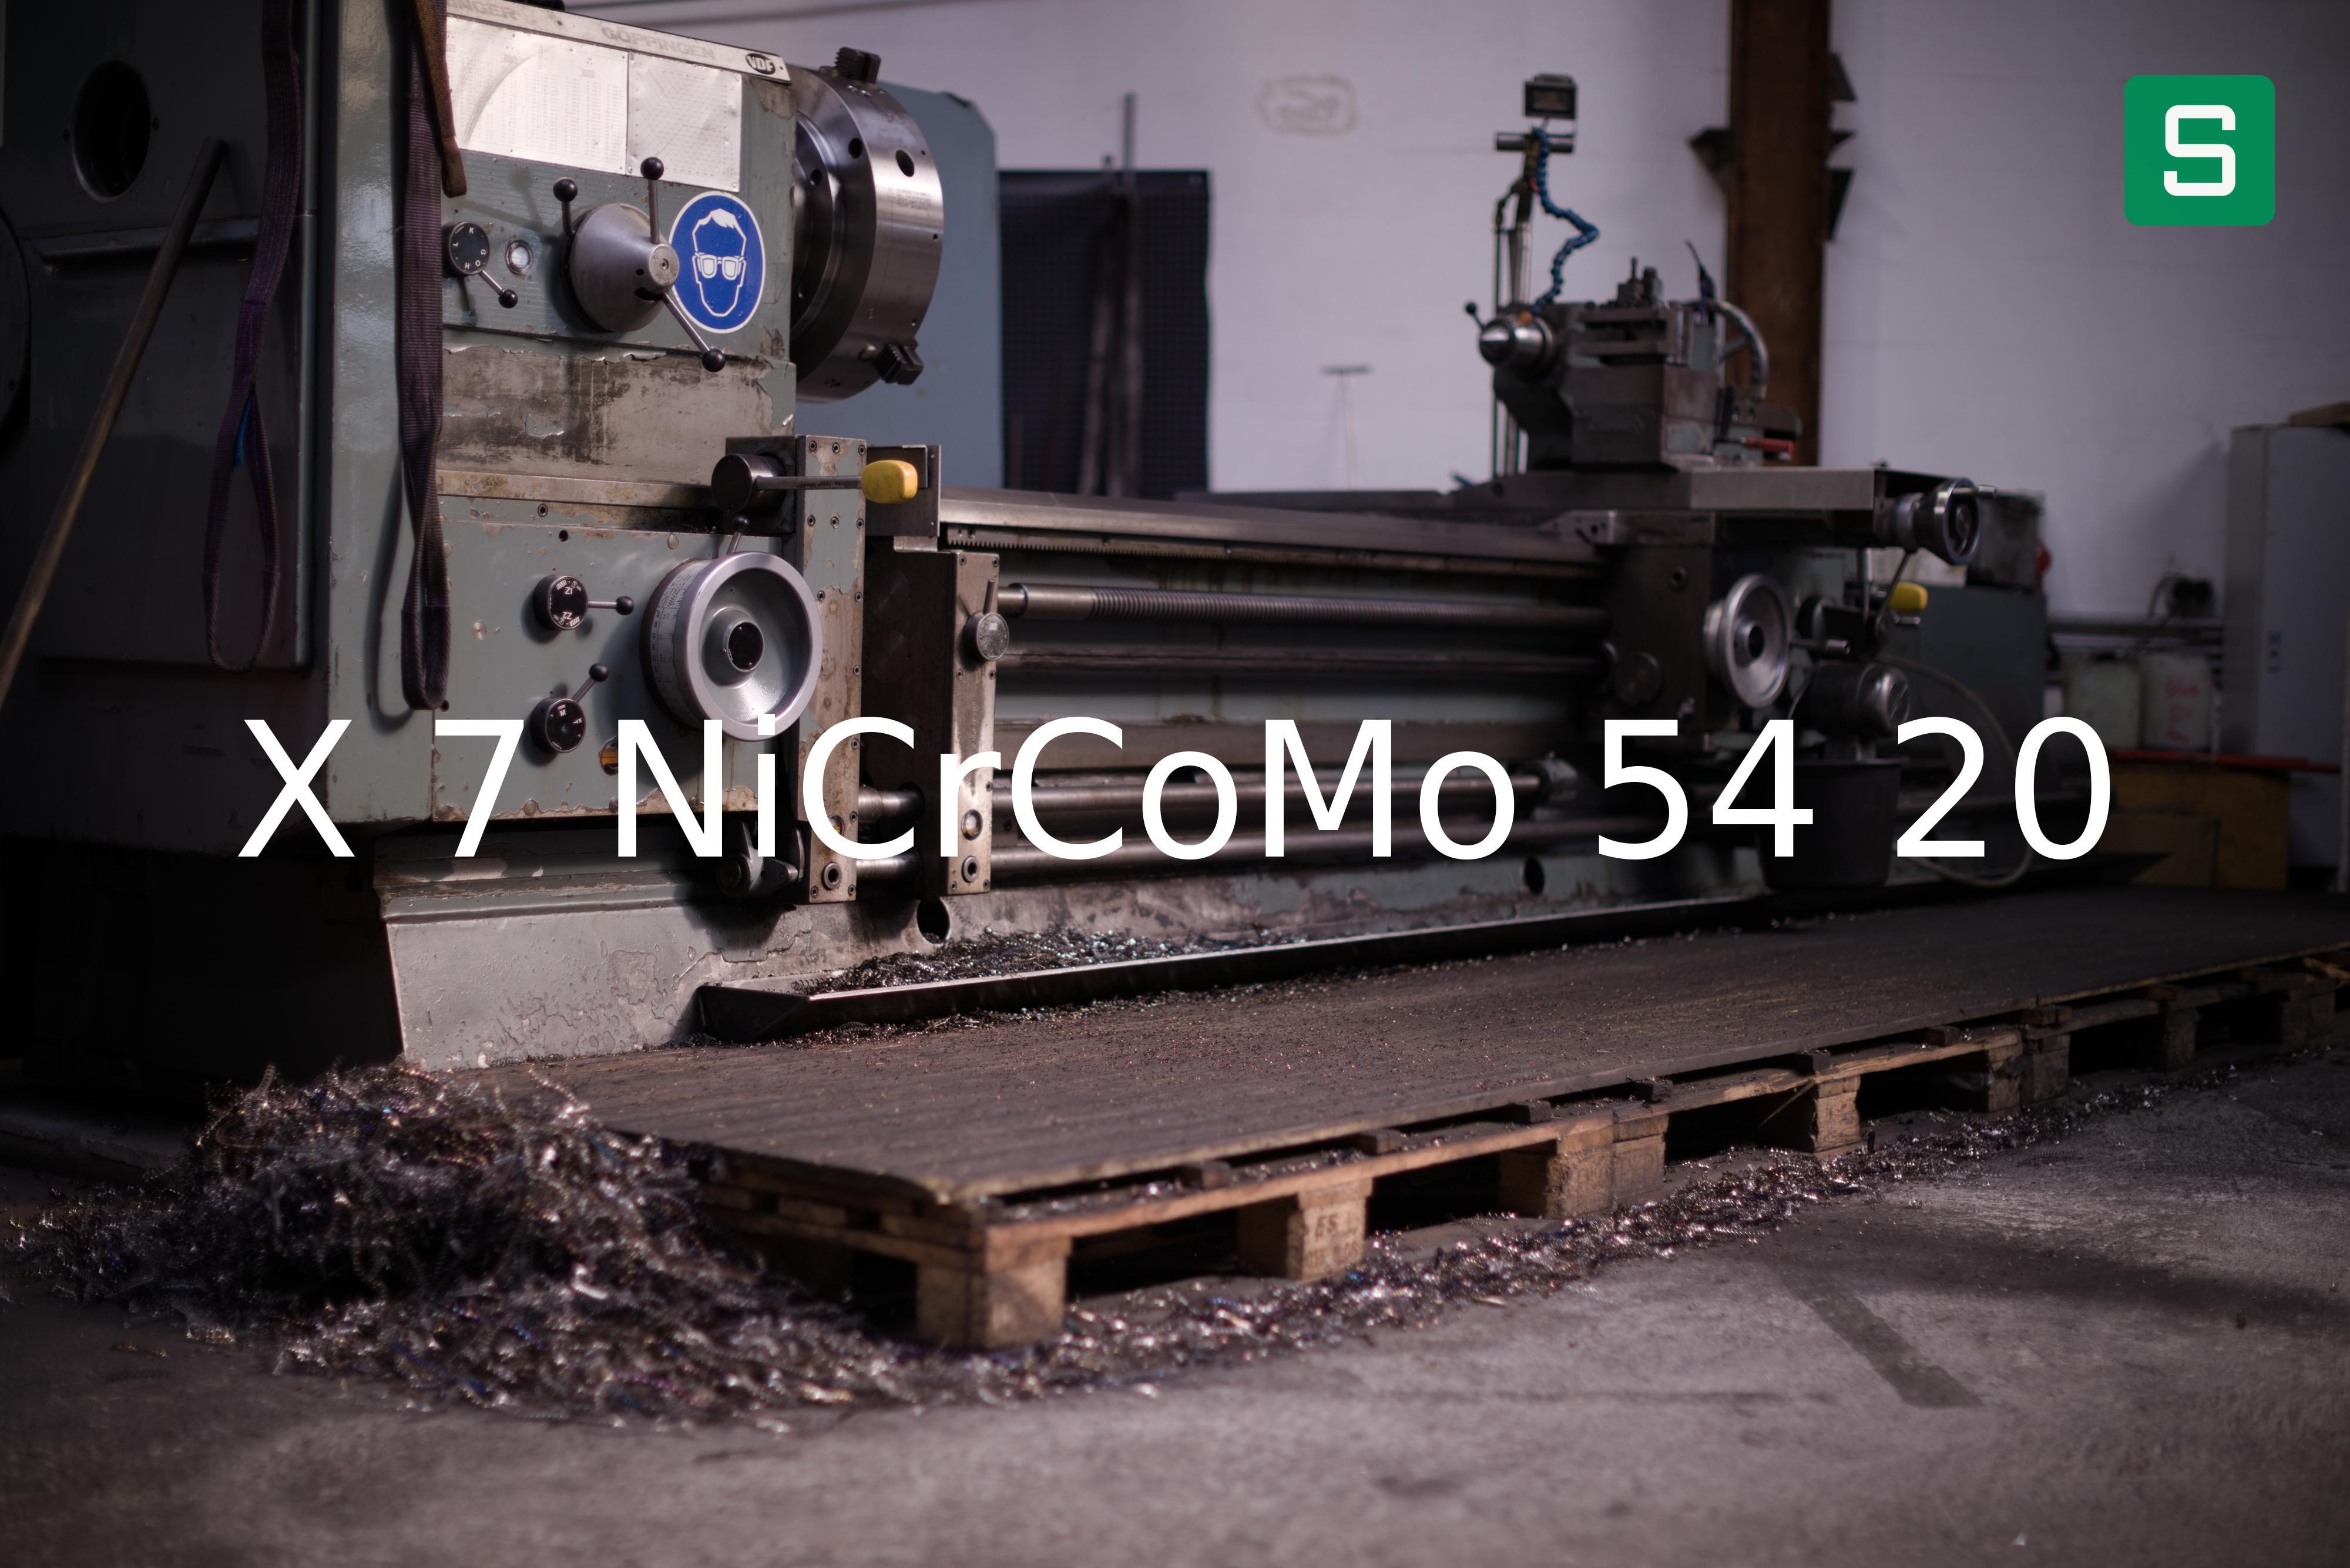 Stahlwerkstoff: X 7 NiCrCoMo 54 20